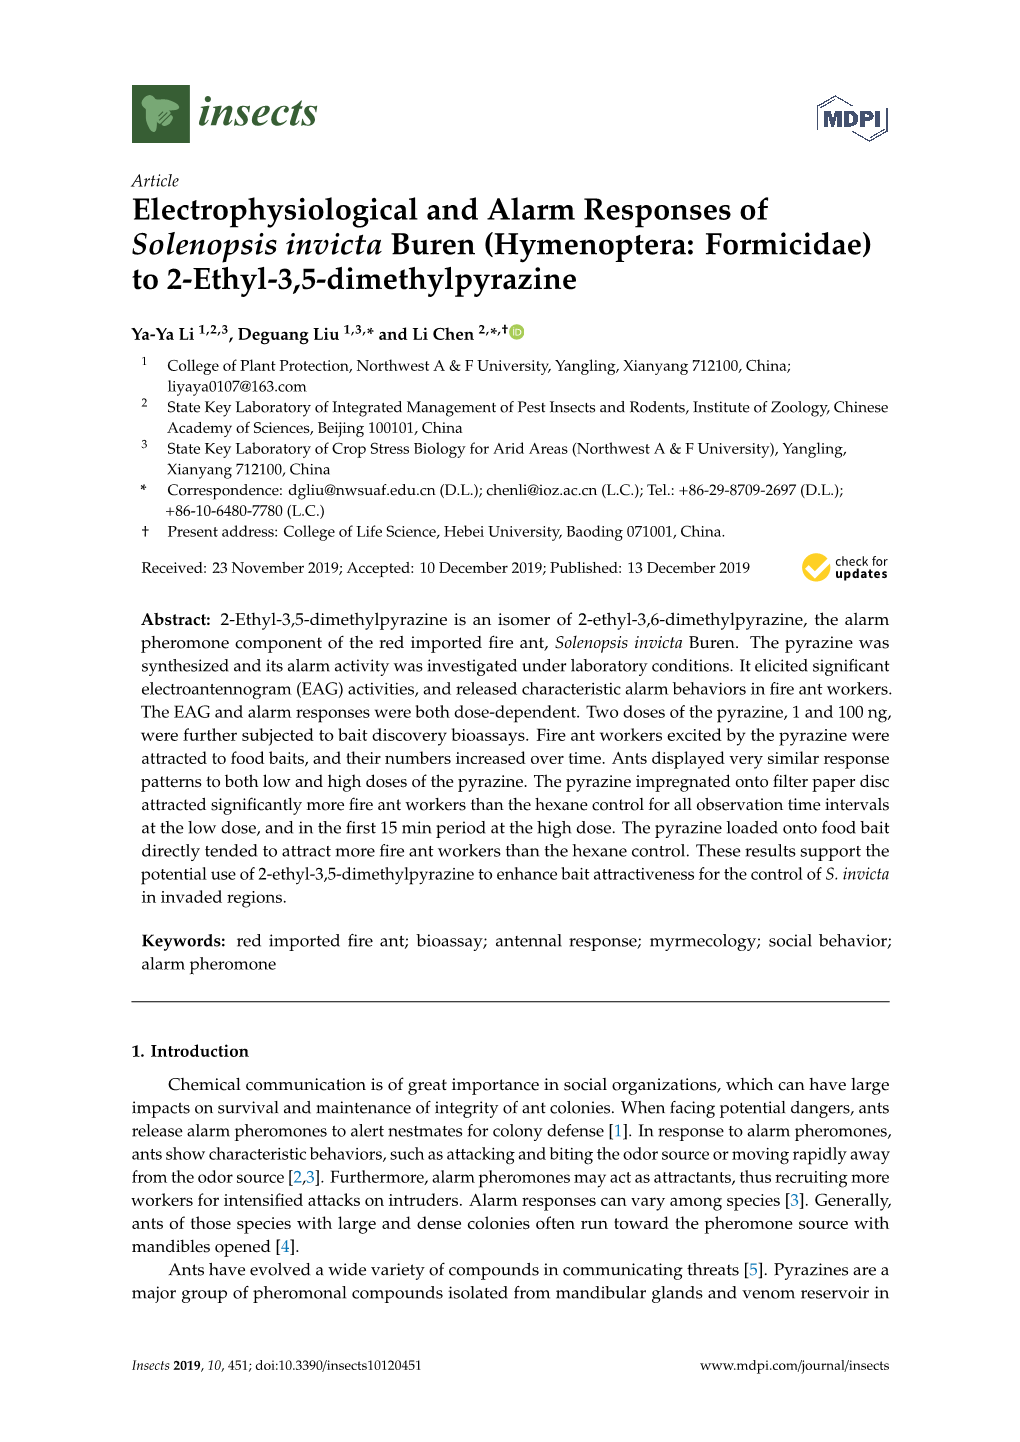 Electrophysiological and Alarm Responses of Solenopsis Invicta Buren (Hymenoptera: Formicidae) to 2-Ethyl-3,5-Dimethylpyrazine